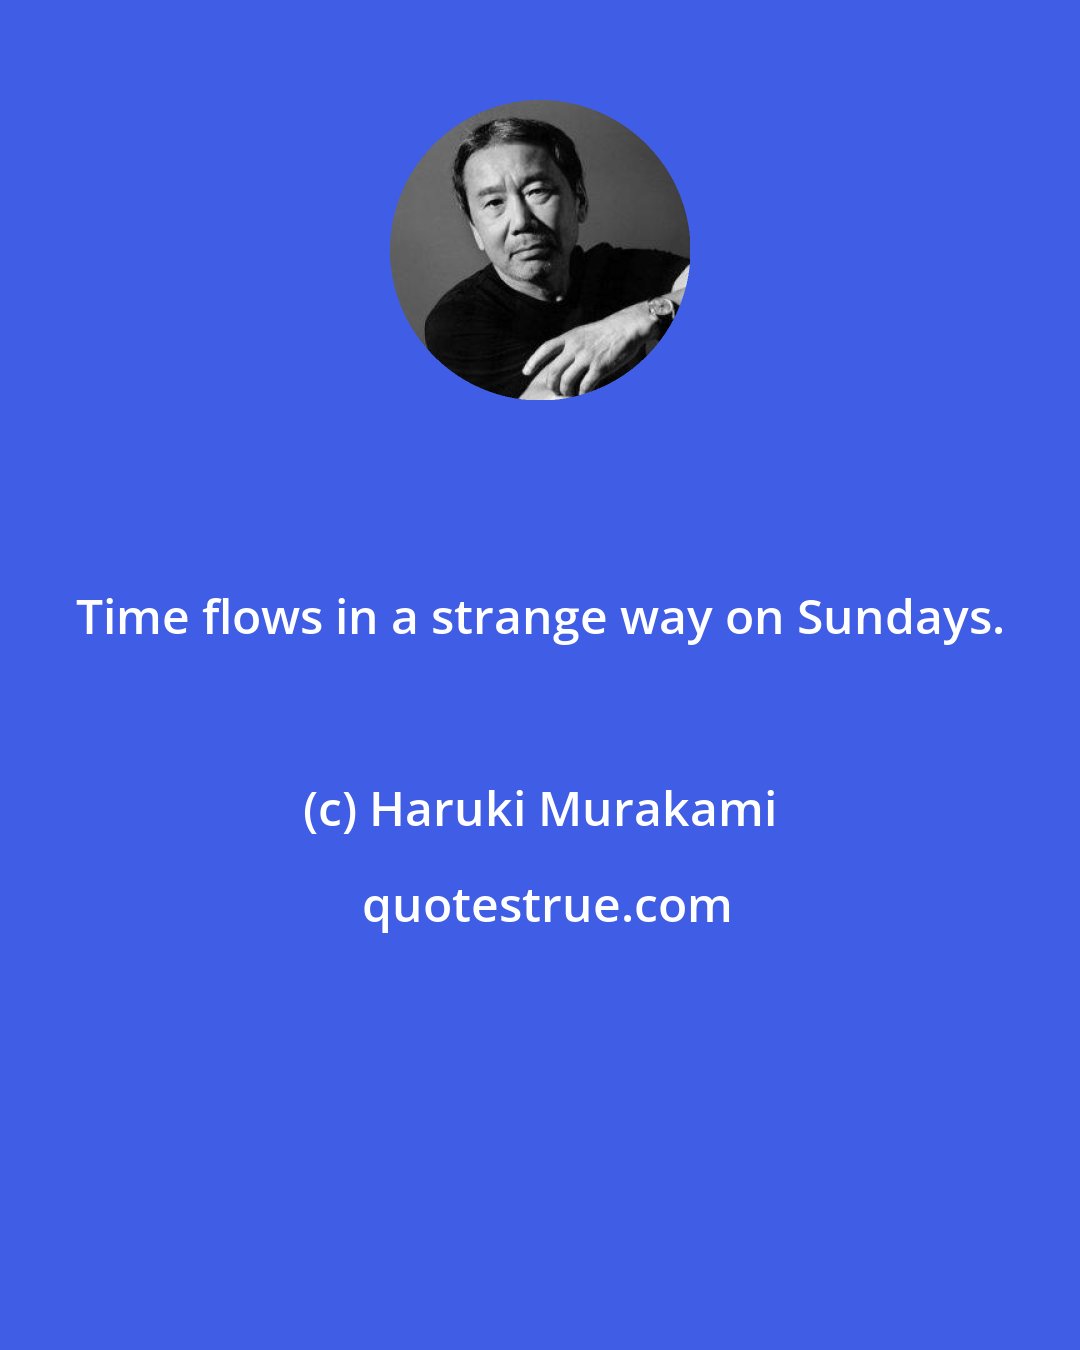 Haruki Murakami: Time flows in a strange way on Sundays.